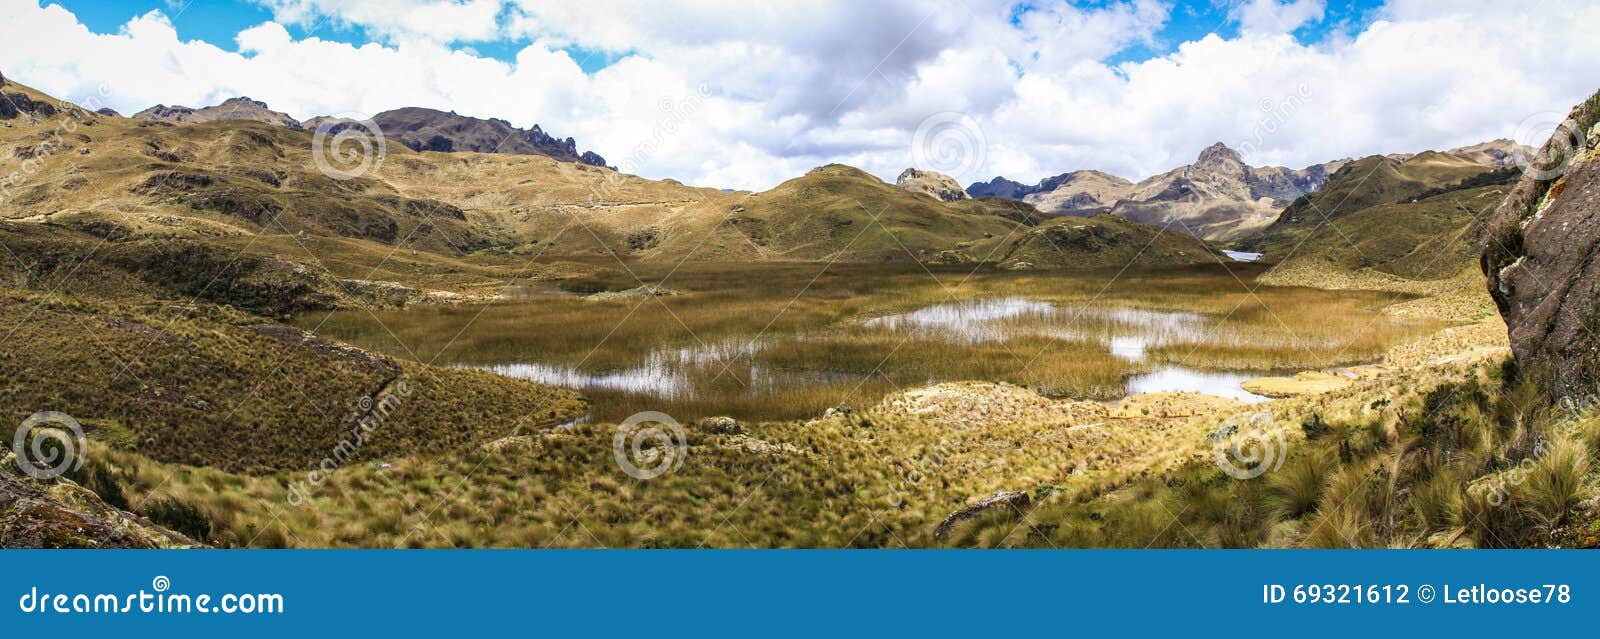 cajas national park panorama, west of cuenca, ecuador